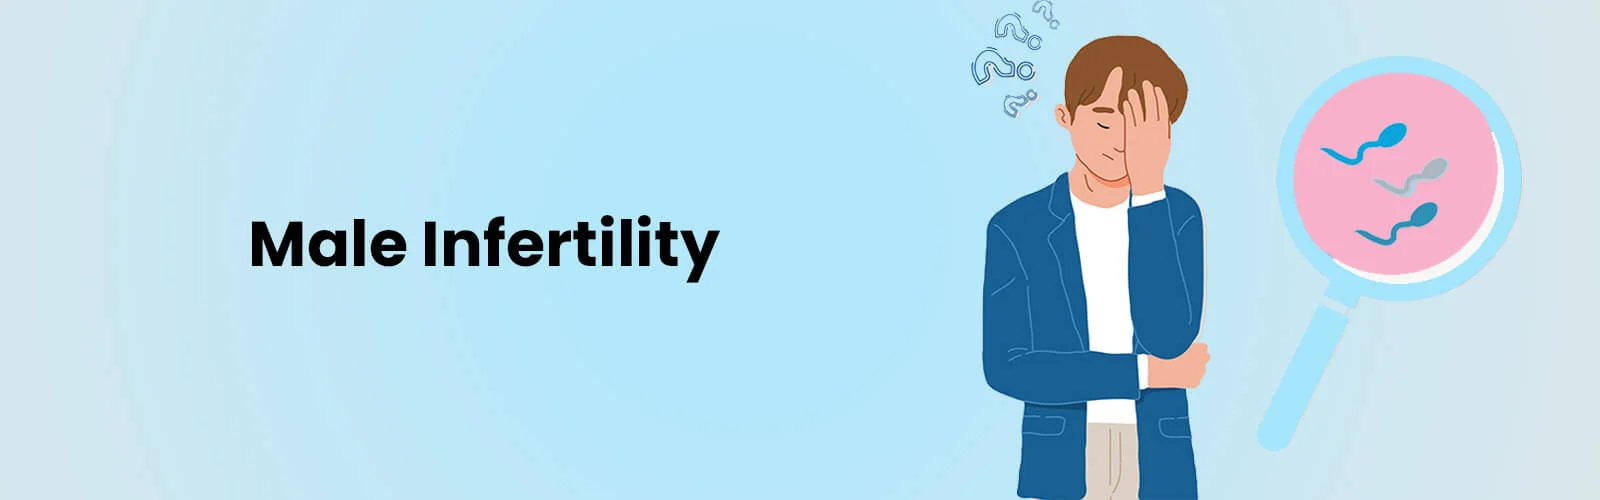 male-infertility-banner